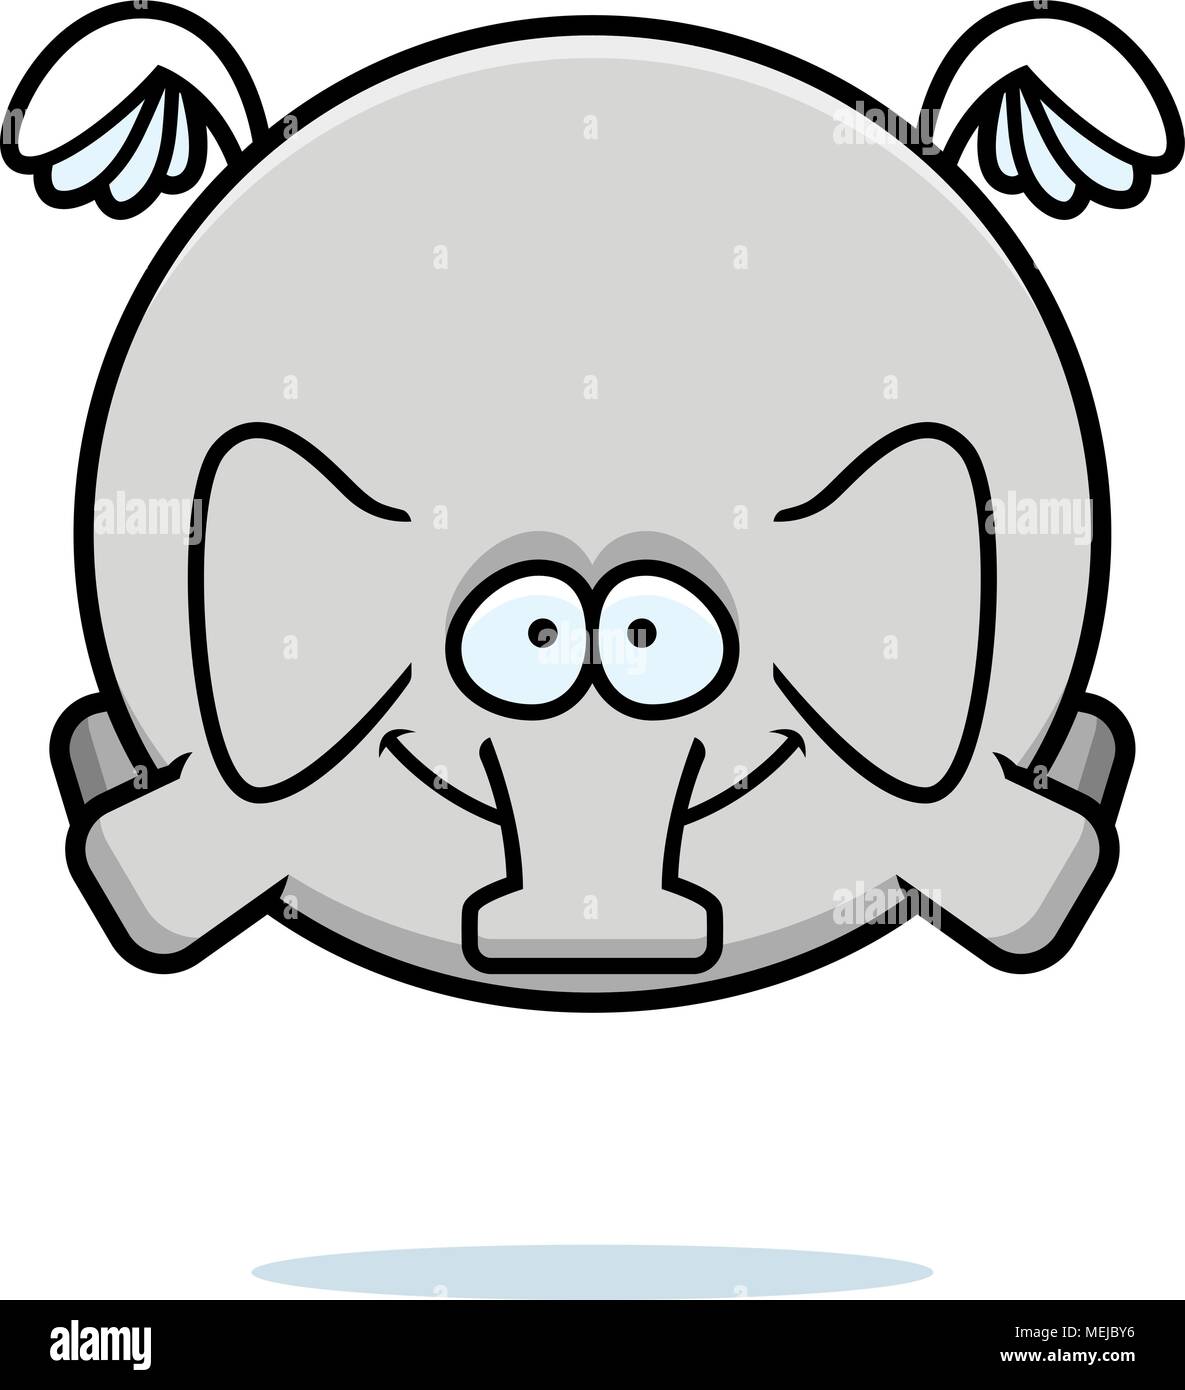 A cartoon illustration of an elephant flying. Stock Vector